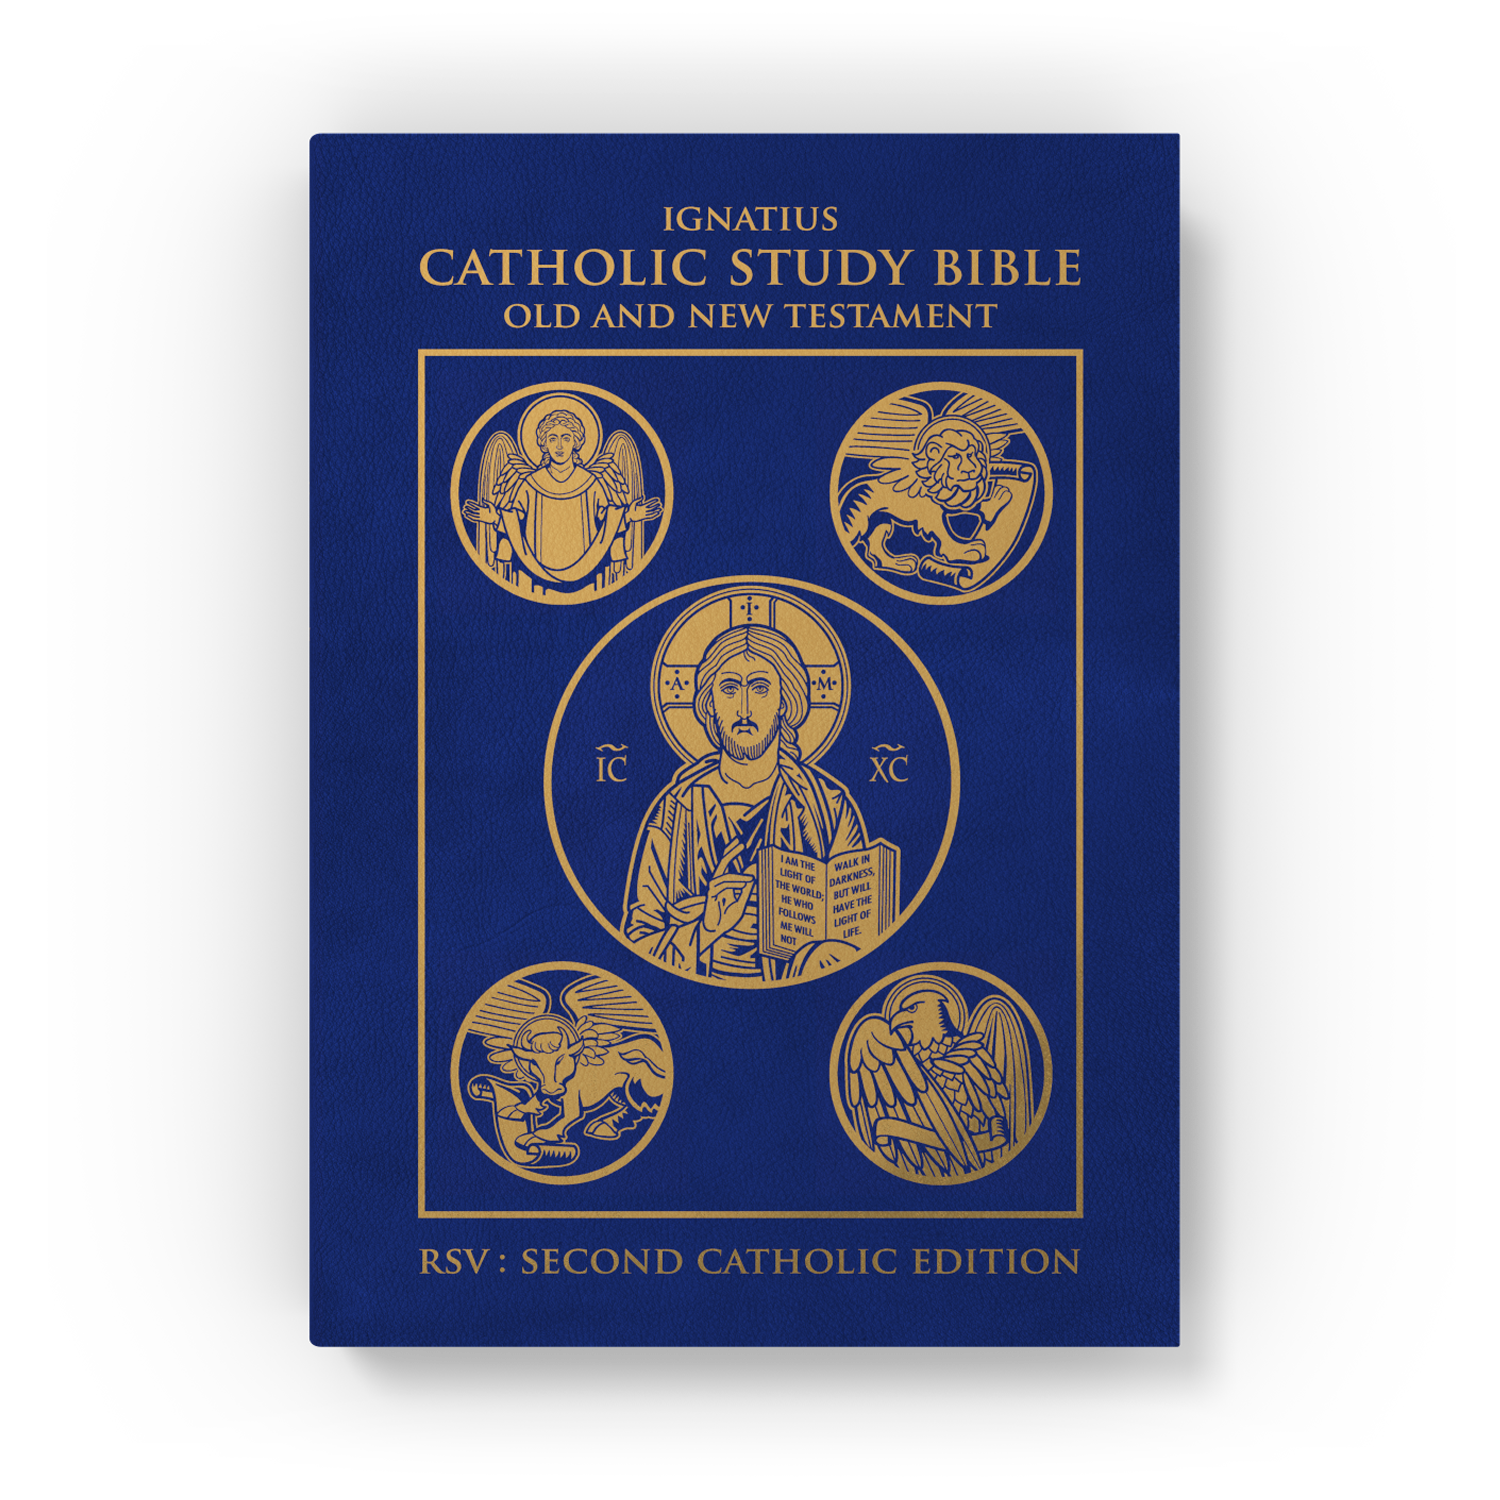 Ignatius Catholic Study Bible - Old and New Testament - Leather